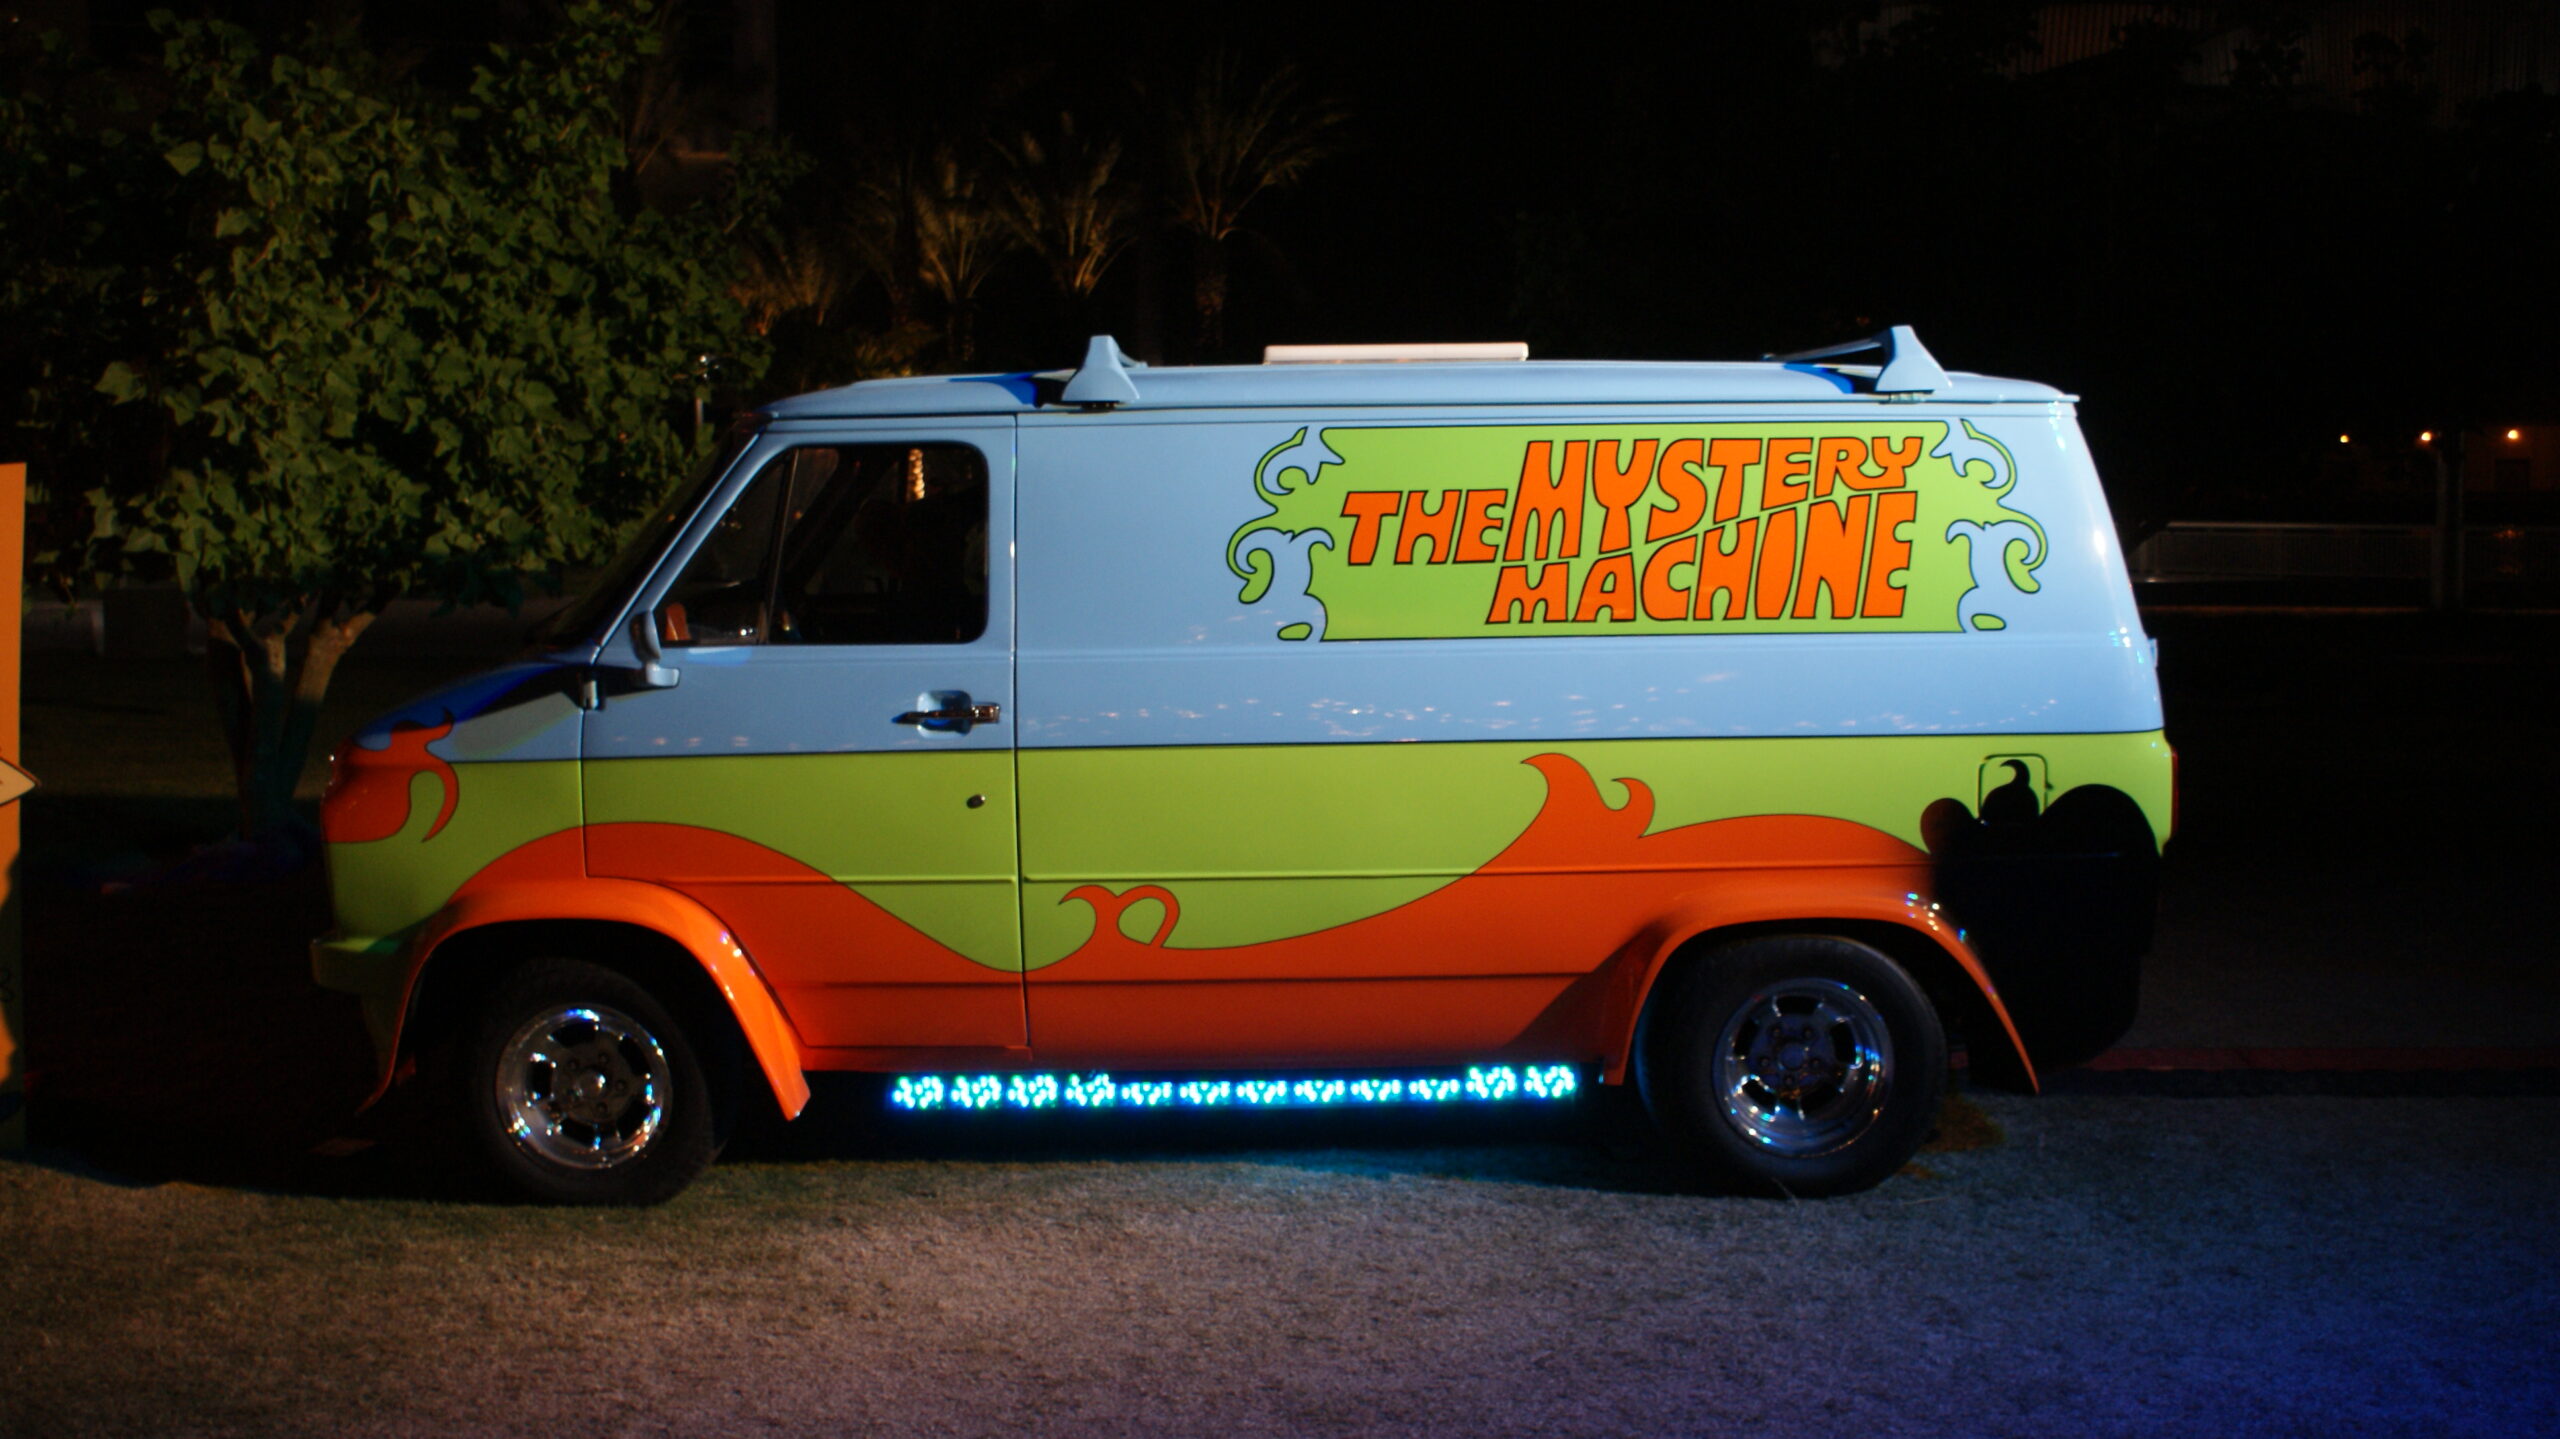 New Scooby-Doo movie portrays Velma as member of LGBTQ+ community